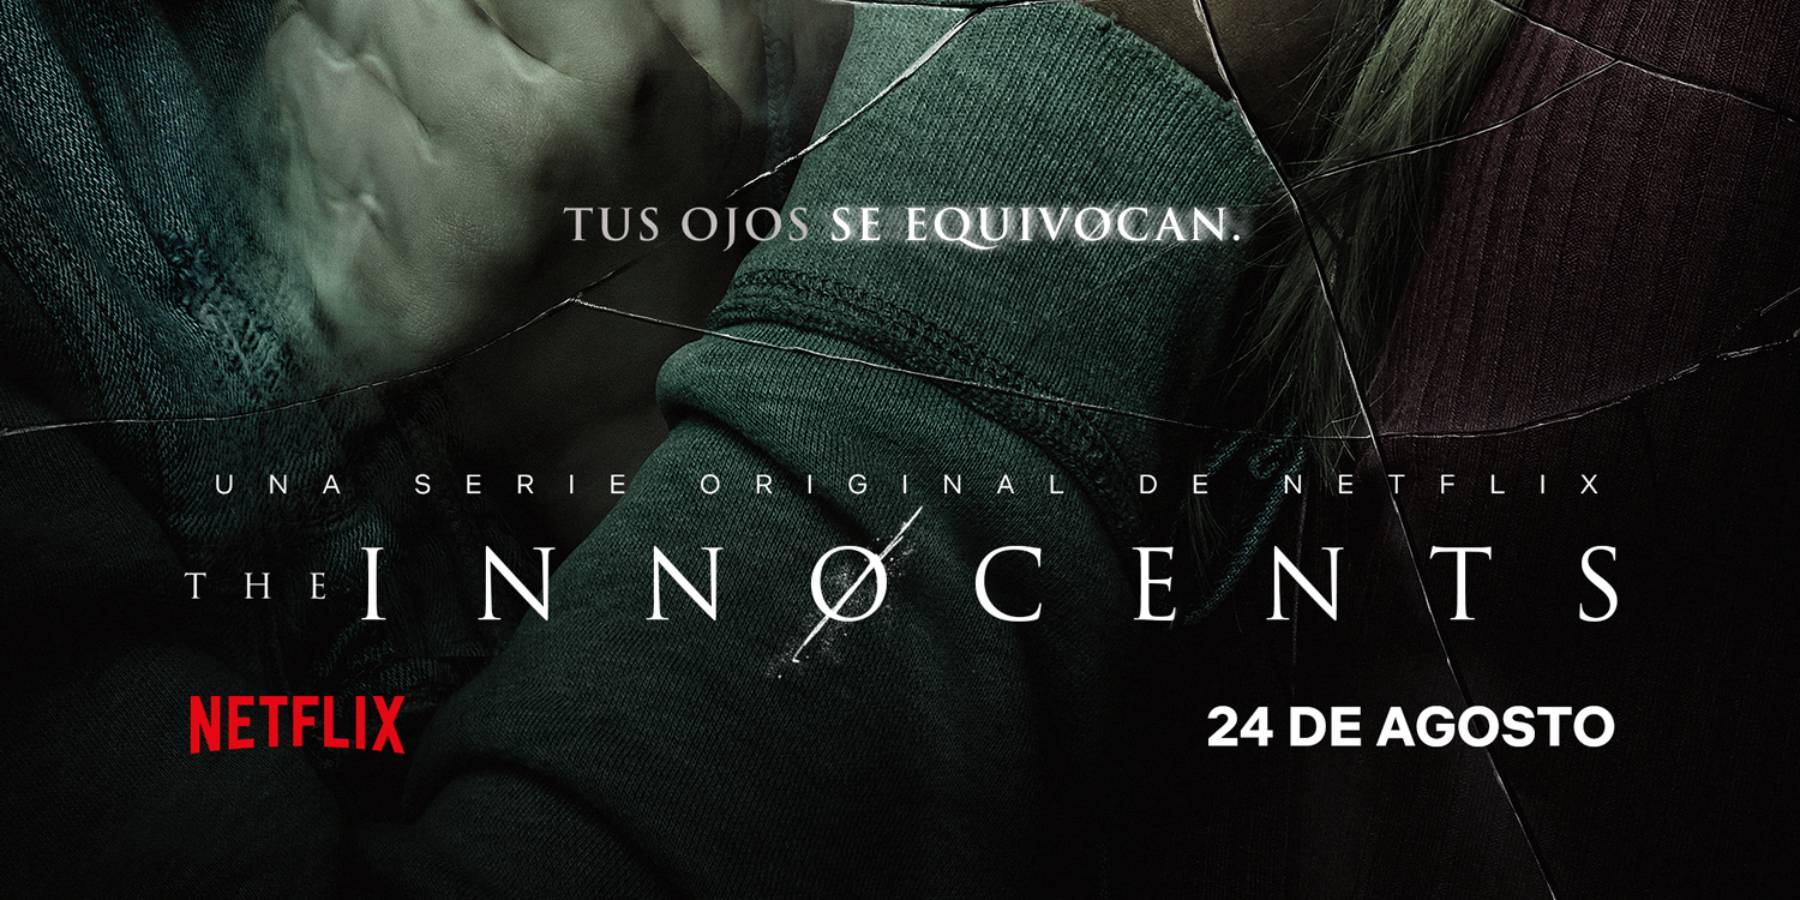 Netflix debuta segundo trailer de The Innocents